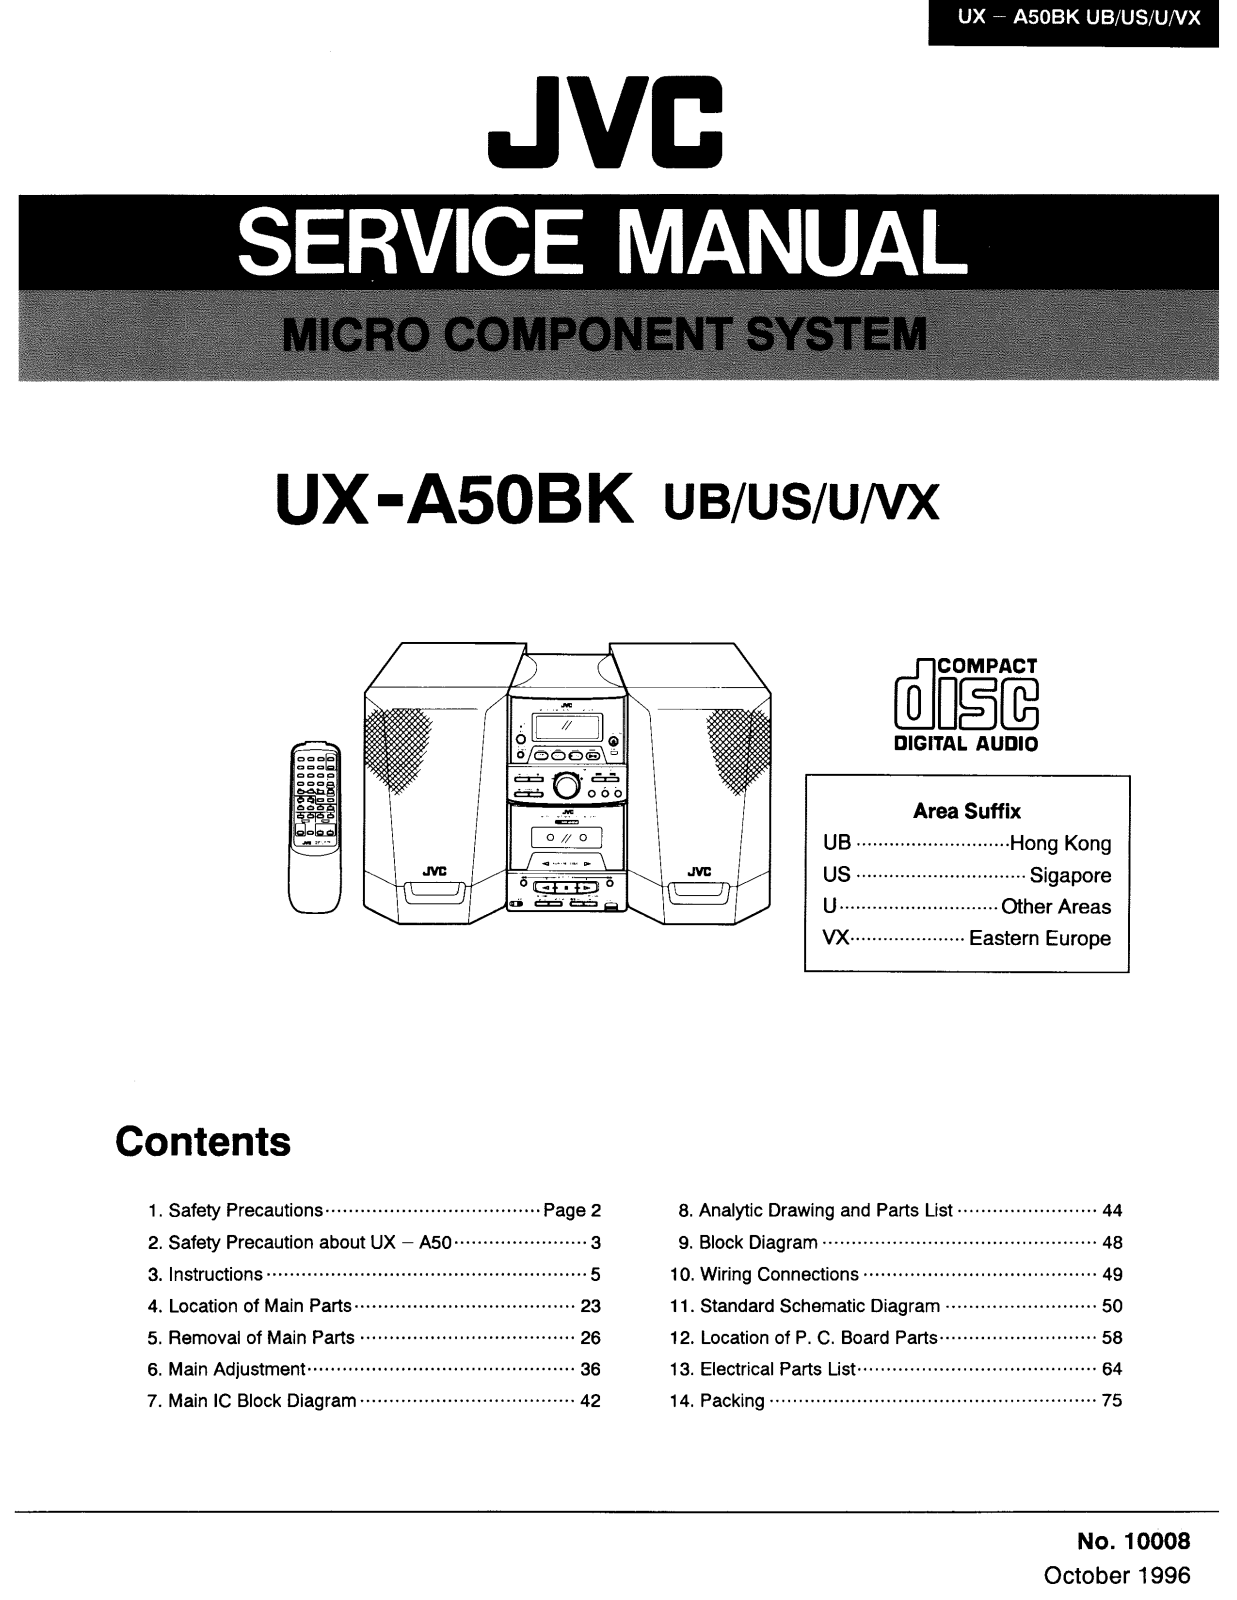 JVC UX-A50BKU, UX-A50BKUB, UX-A50BKUS, UX-A50BKVX Service Manual